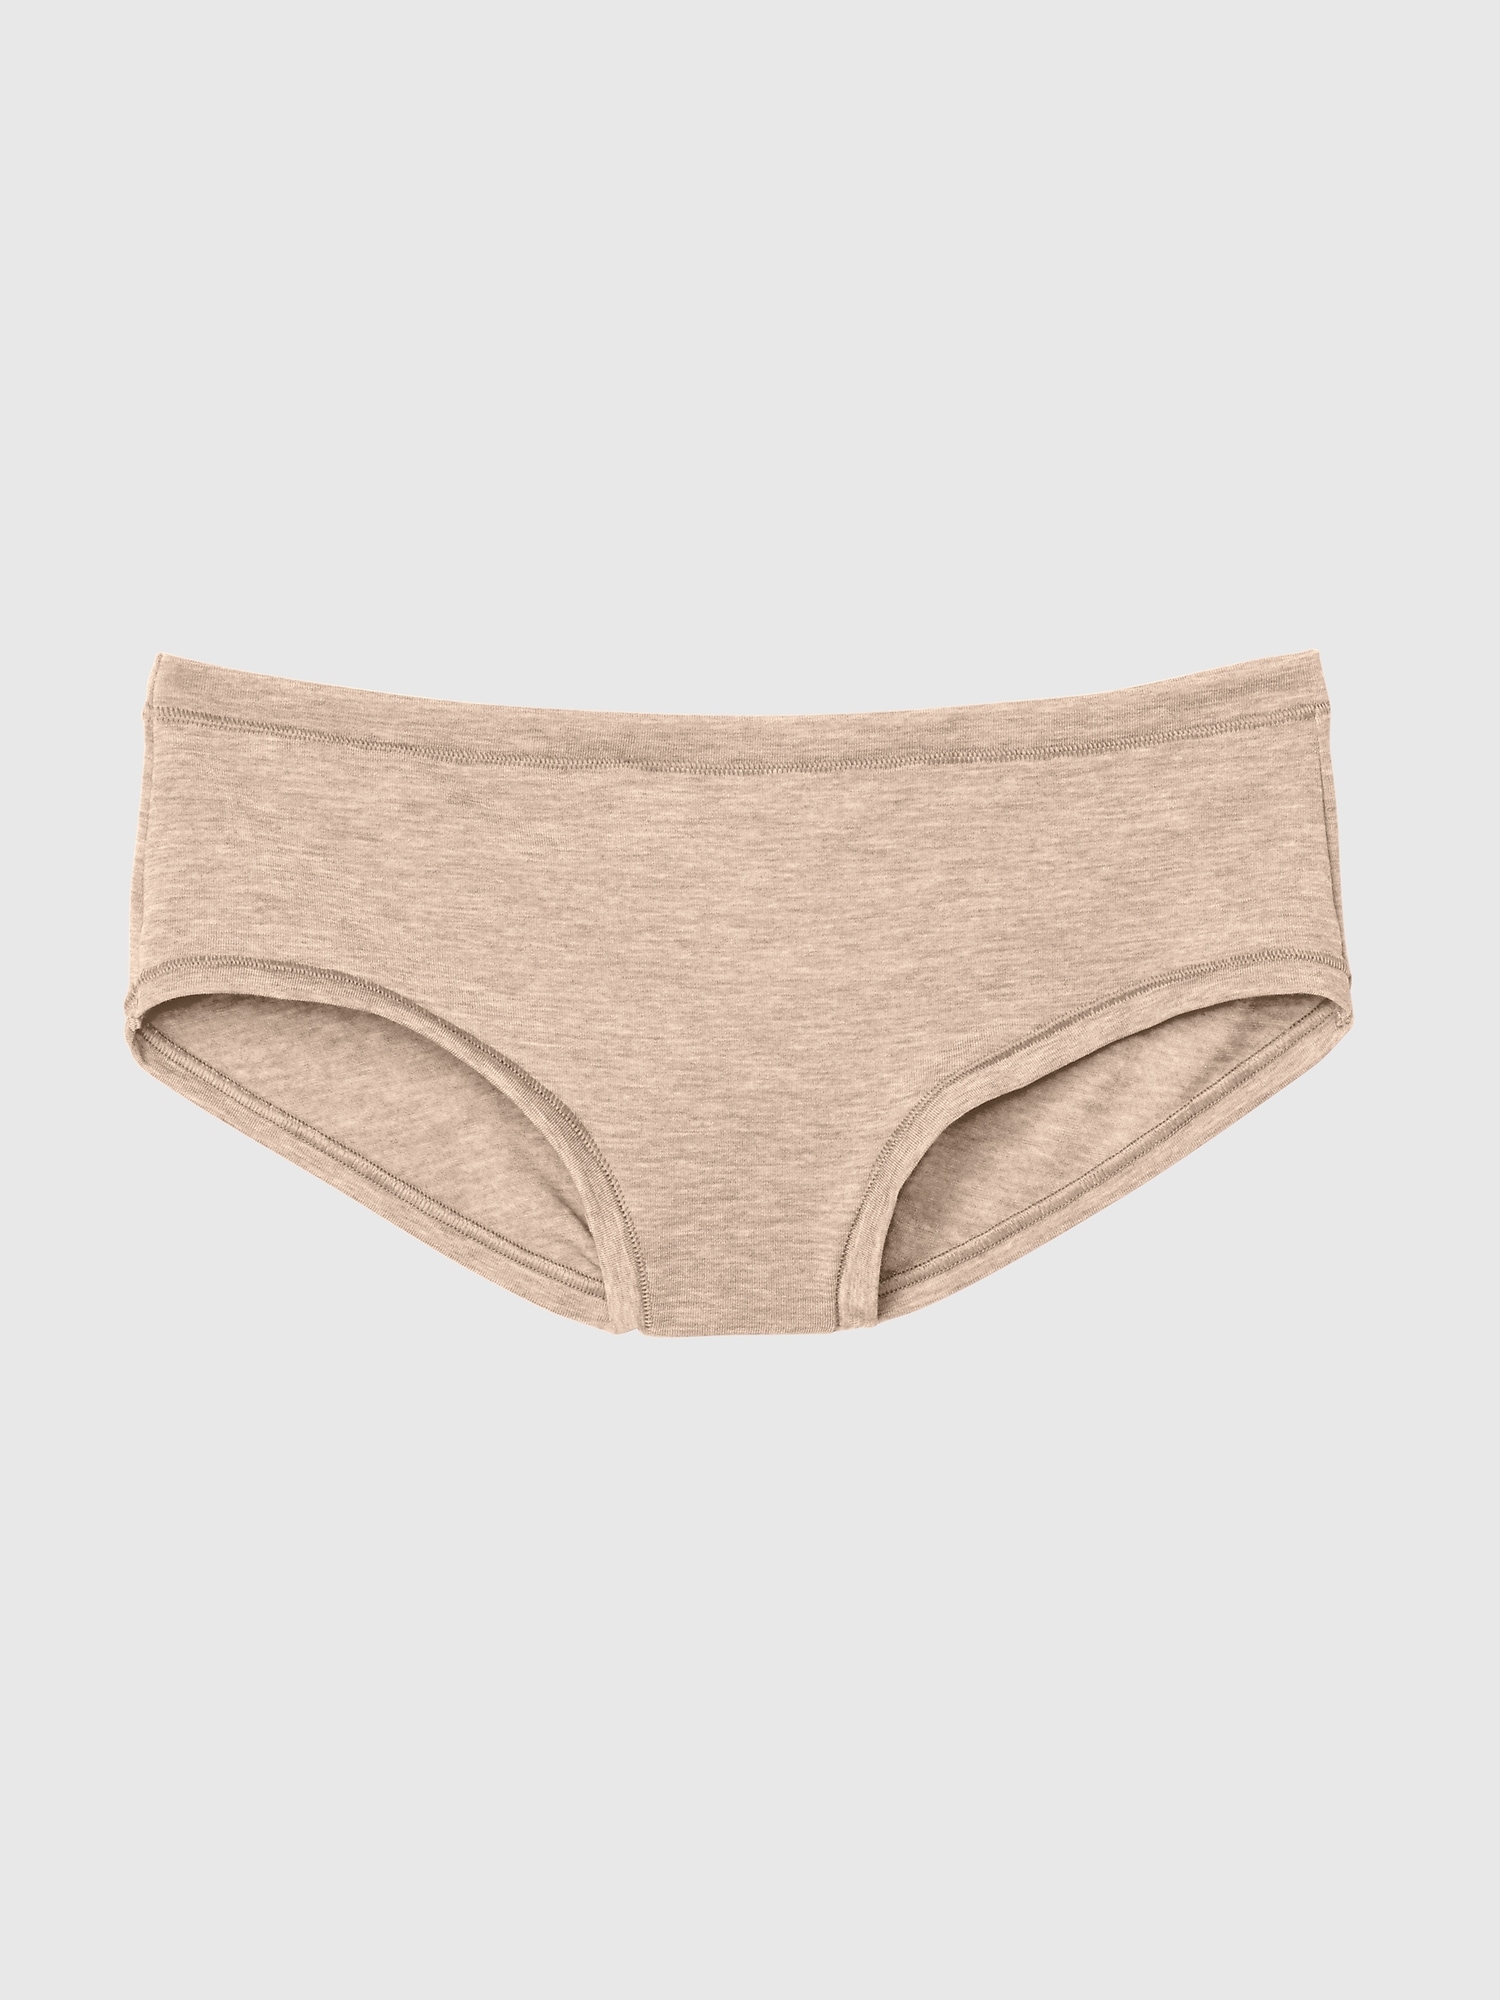 GAP Women's 3-Pack Breathe Hipster Underpants Underwear, Multi